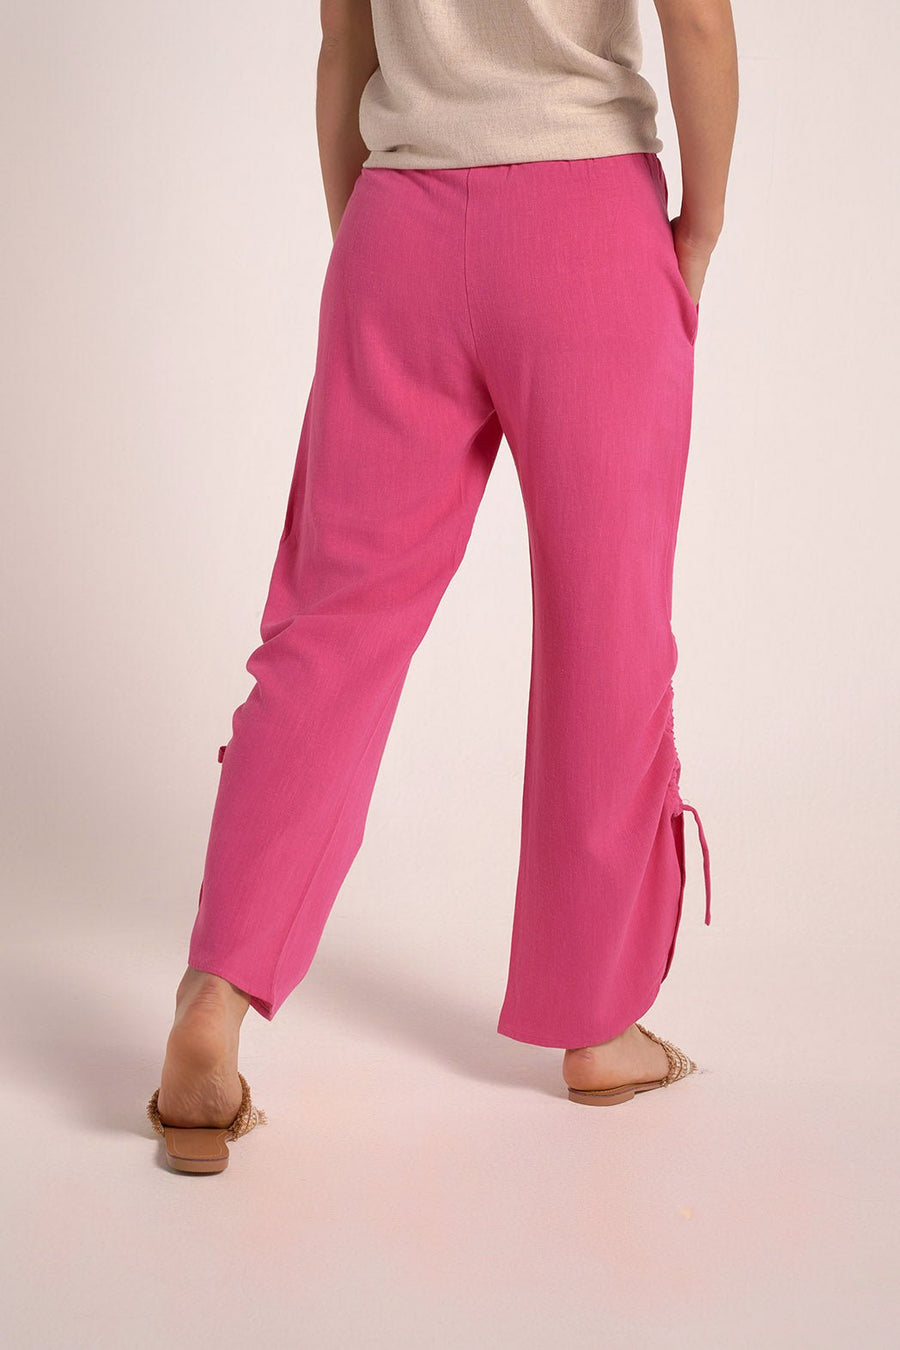 Hot pink Side Drawstrings pants - nahlaelalfydesigns